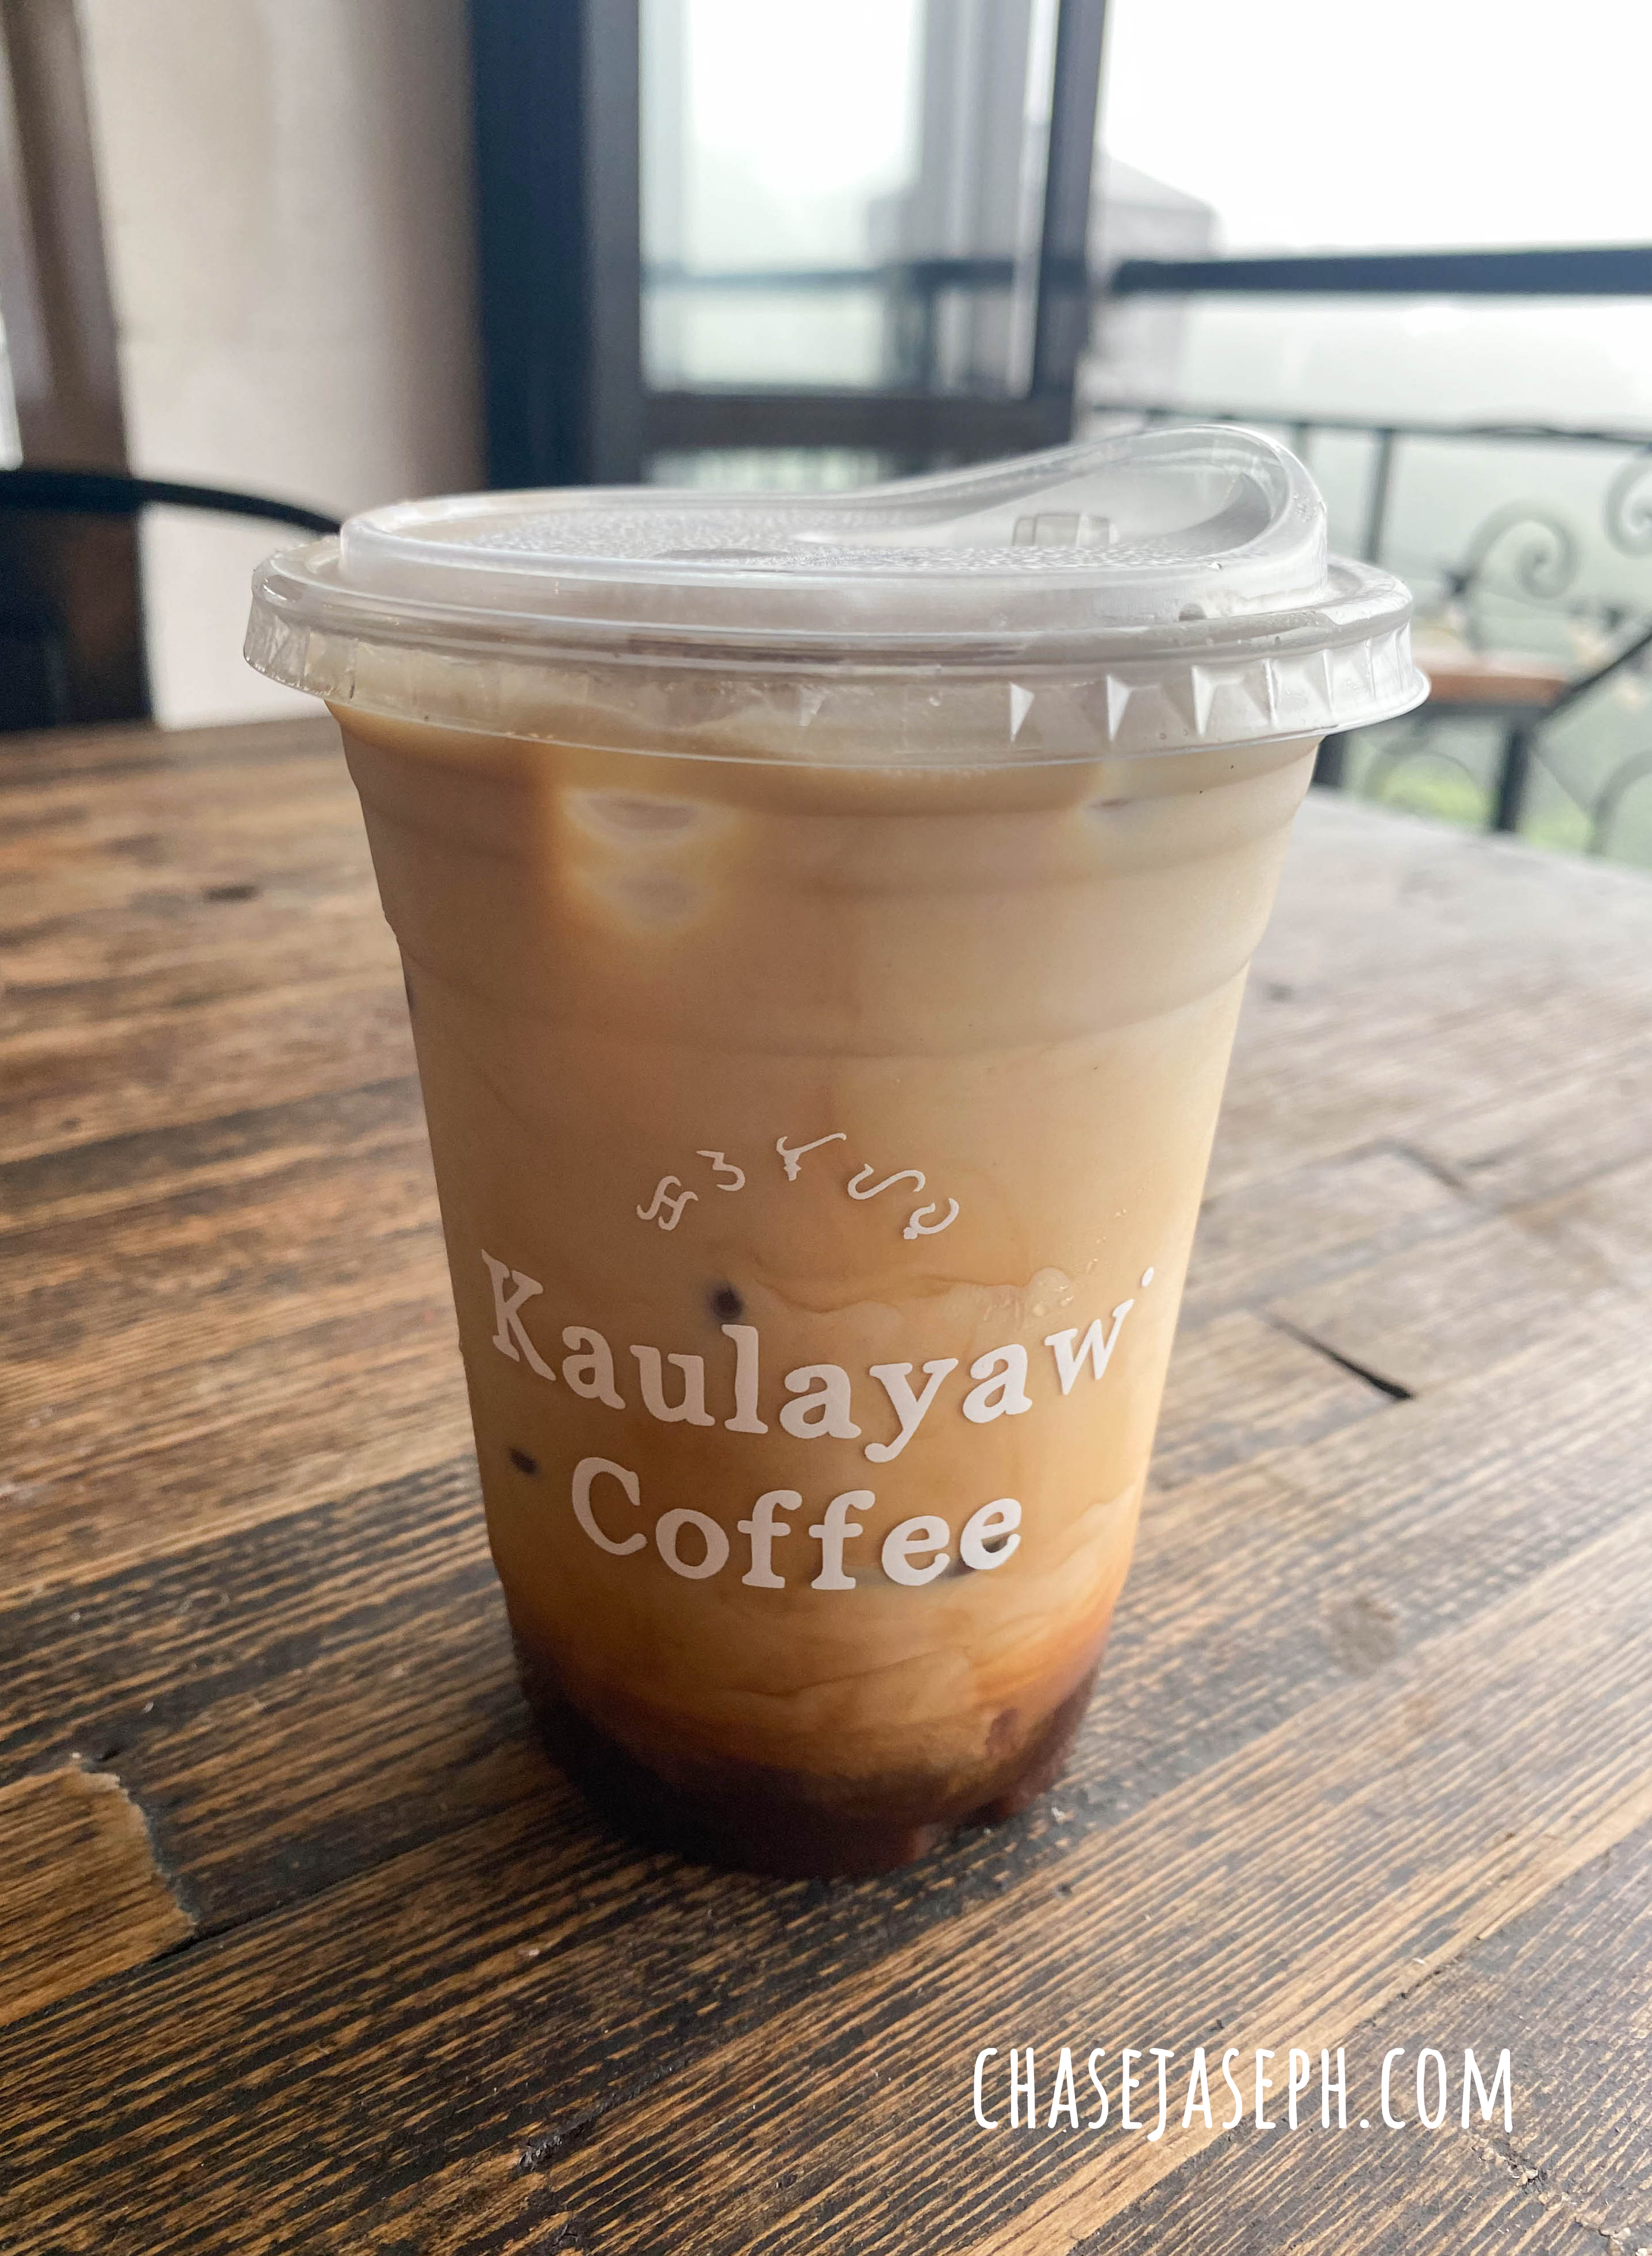 Kaulayaw Coffee - Antipolo, Rizal (Food Guide)